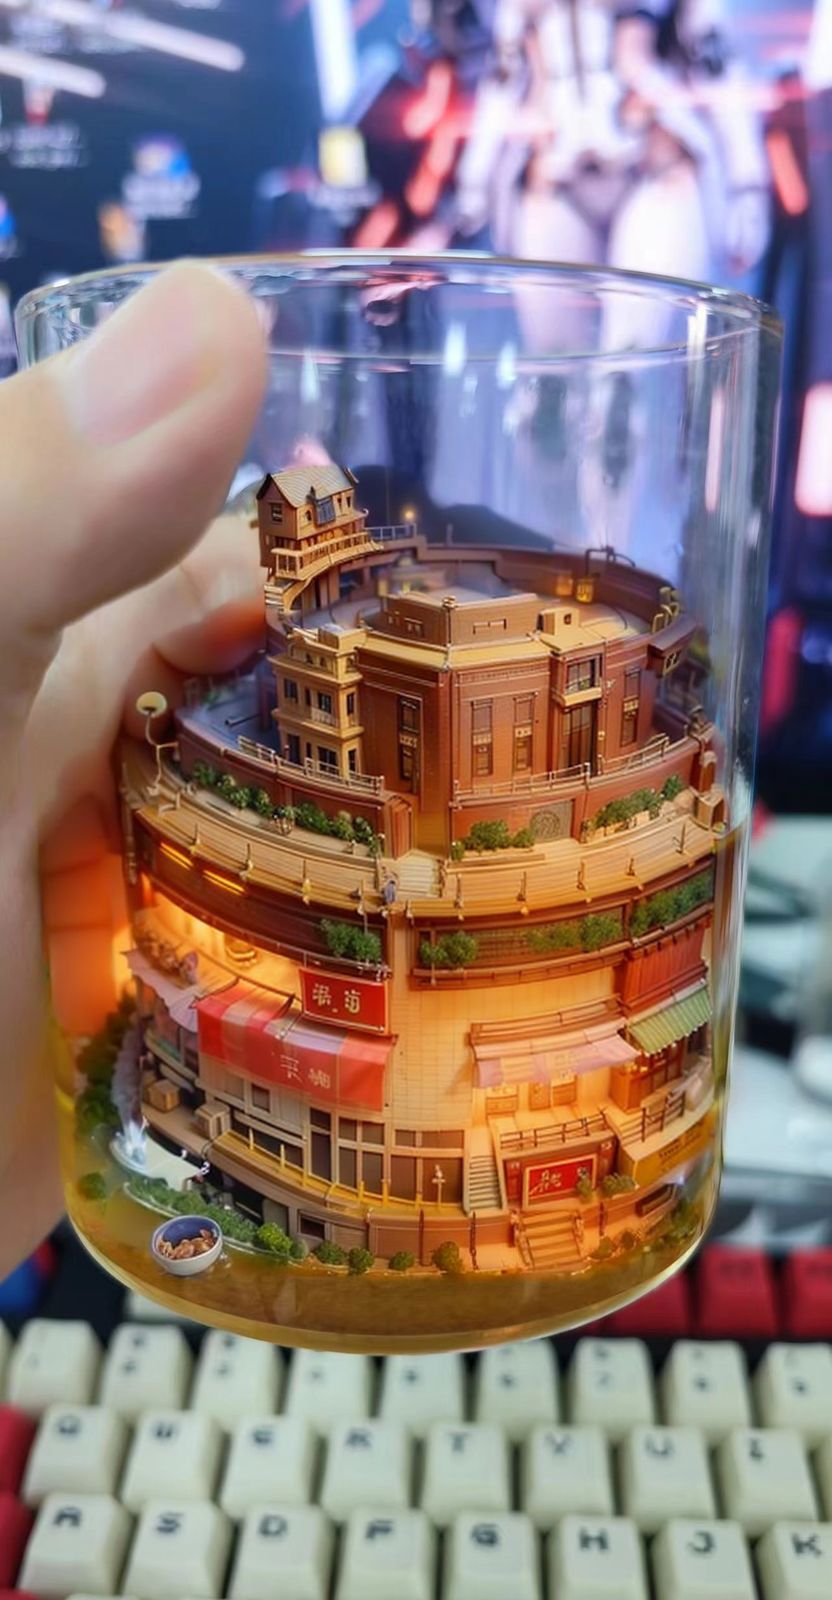 A Miniature Model of a Multi-Story Building Inside a Glass.